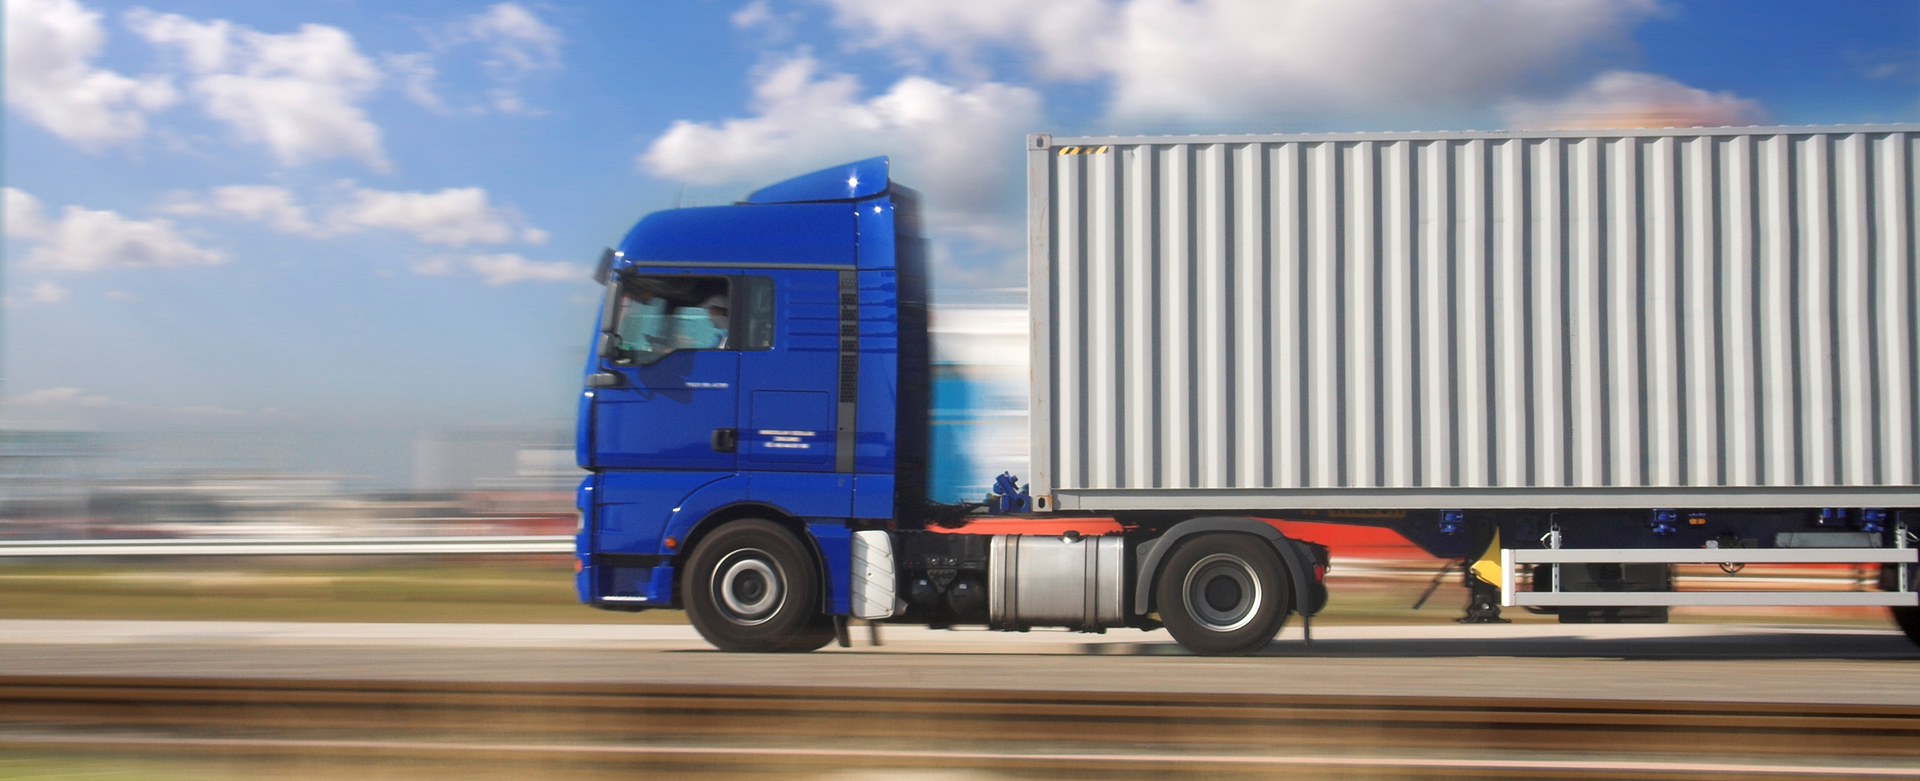 Melayani jasa Land Trucking Darat untuk muatan container / barang pribadi maupun cargo project / break bulk cargo